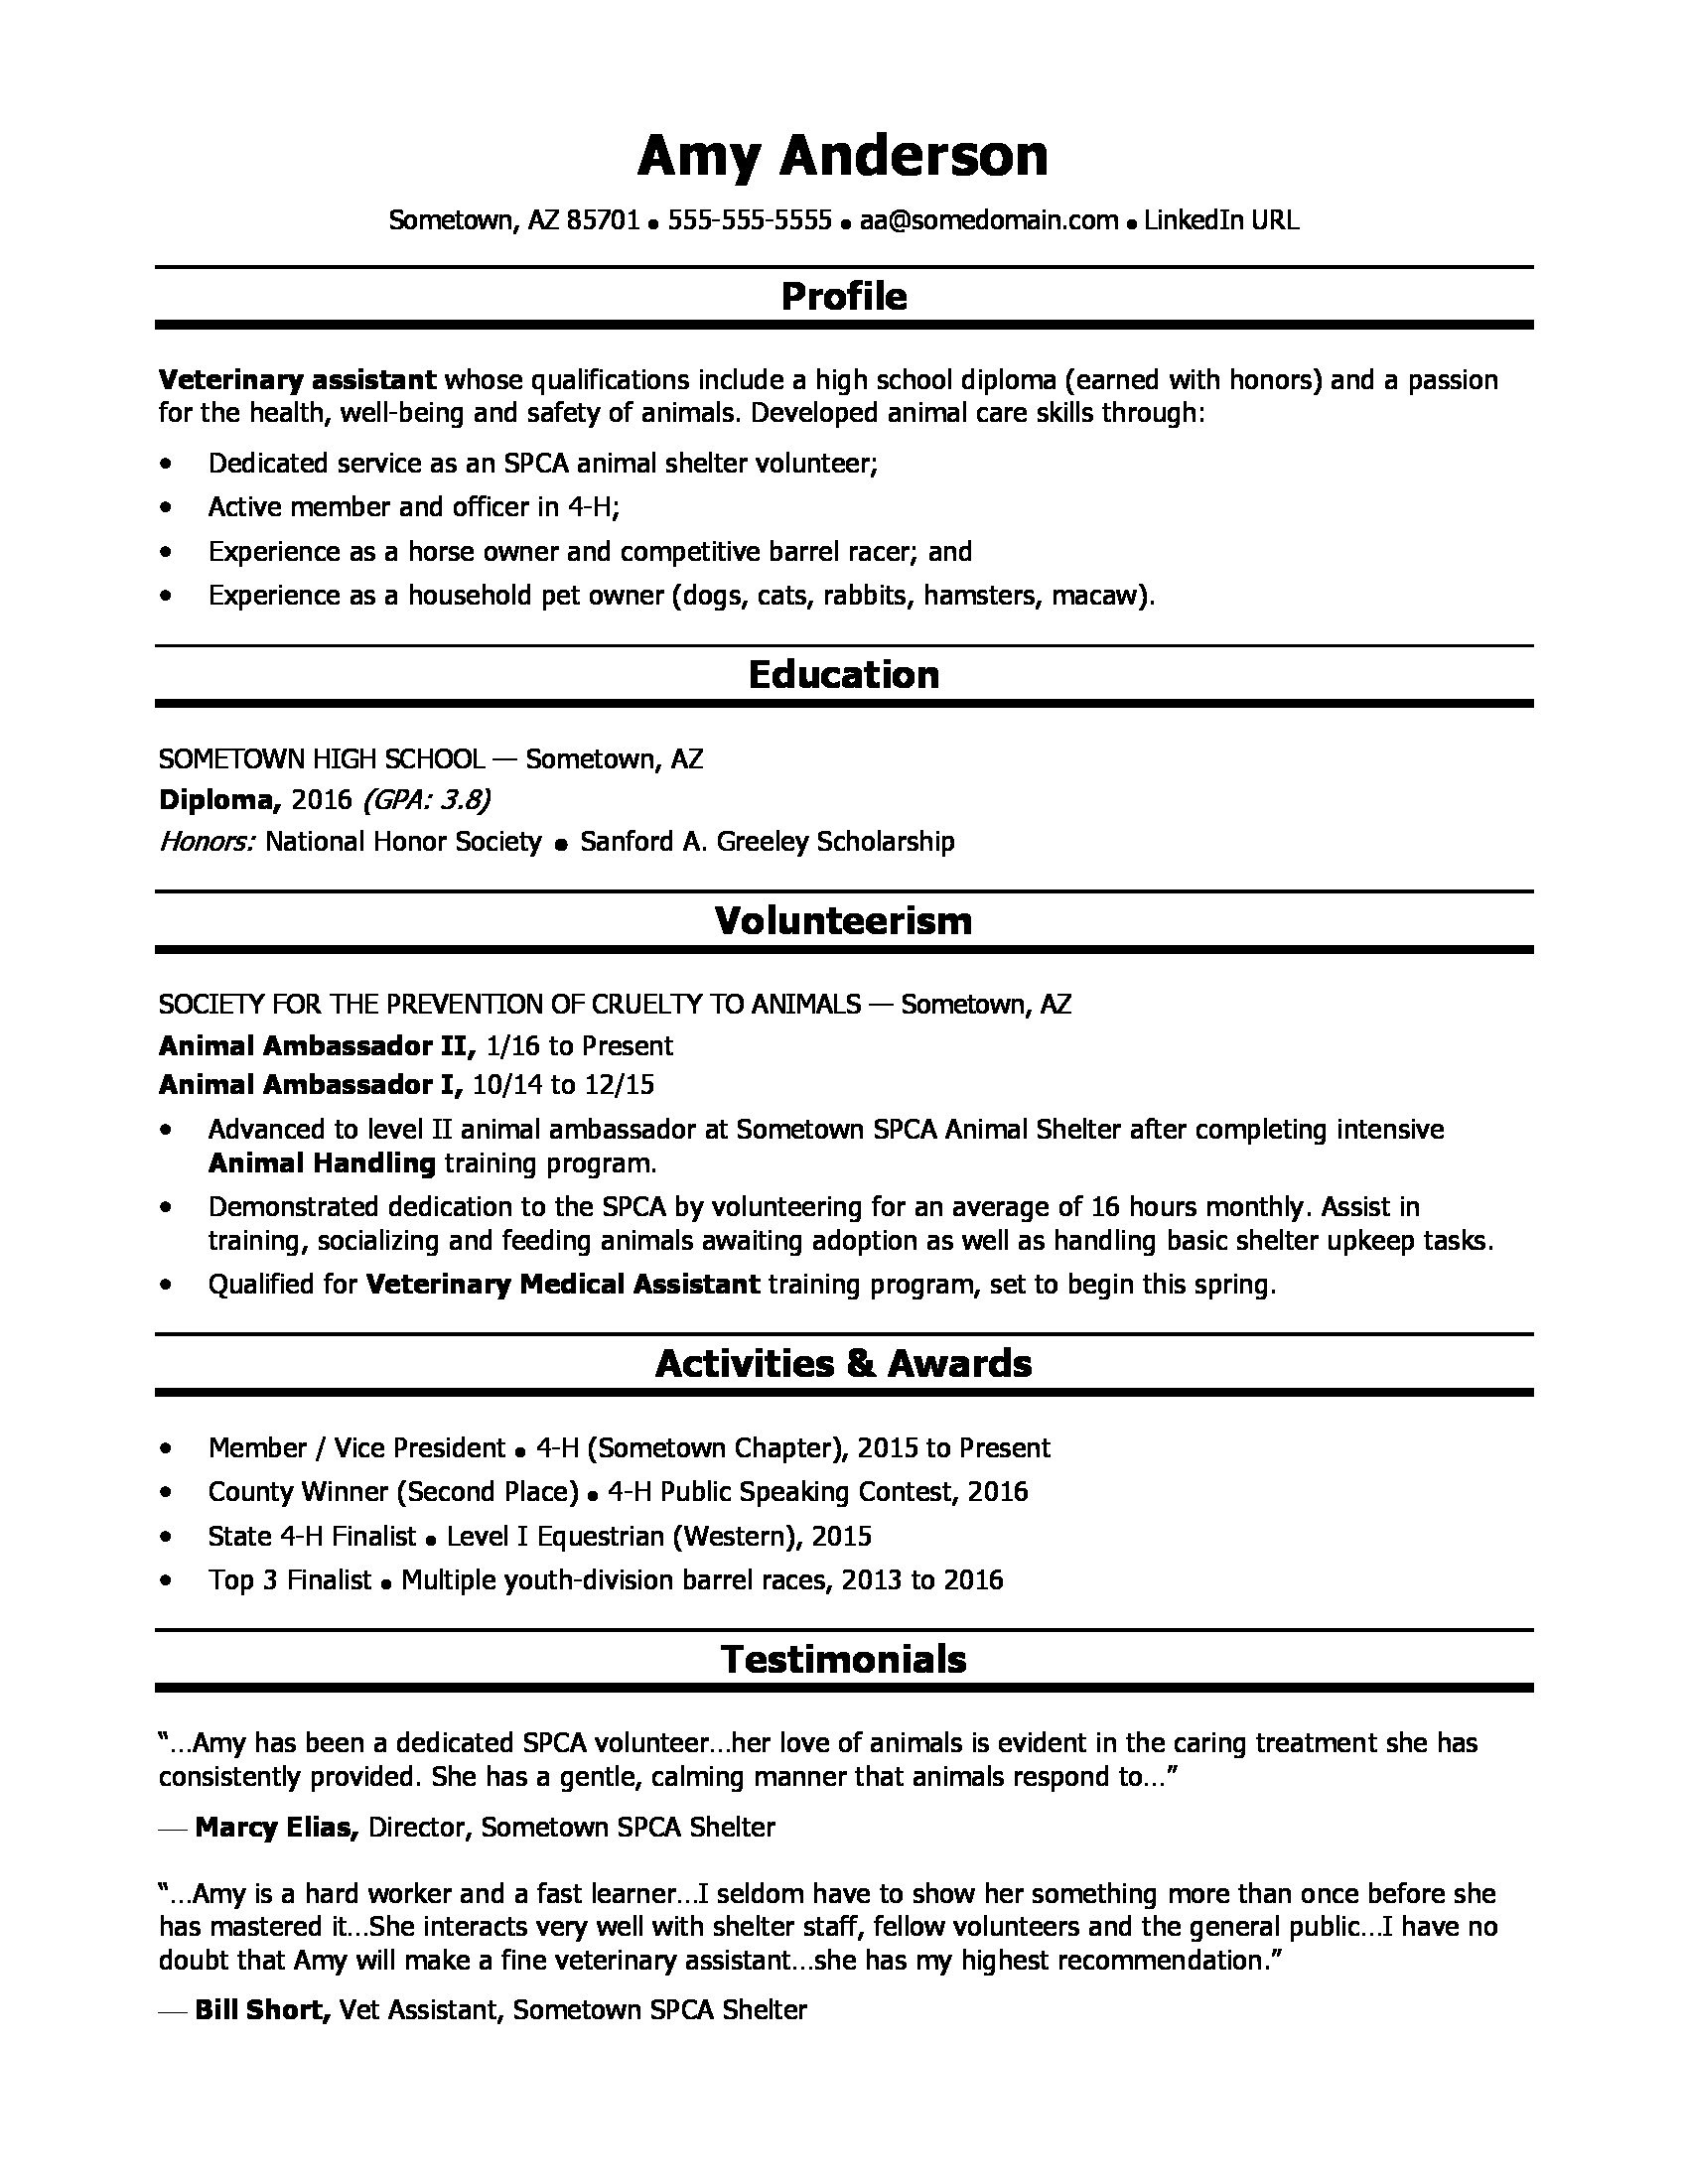 Sample Resume Right Out Of High School High School Grad Resume Sample Monster.com